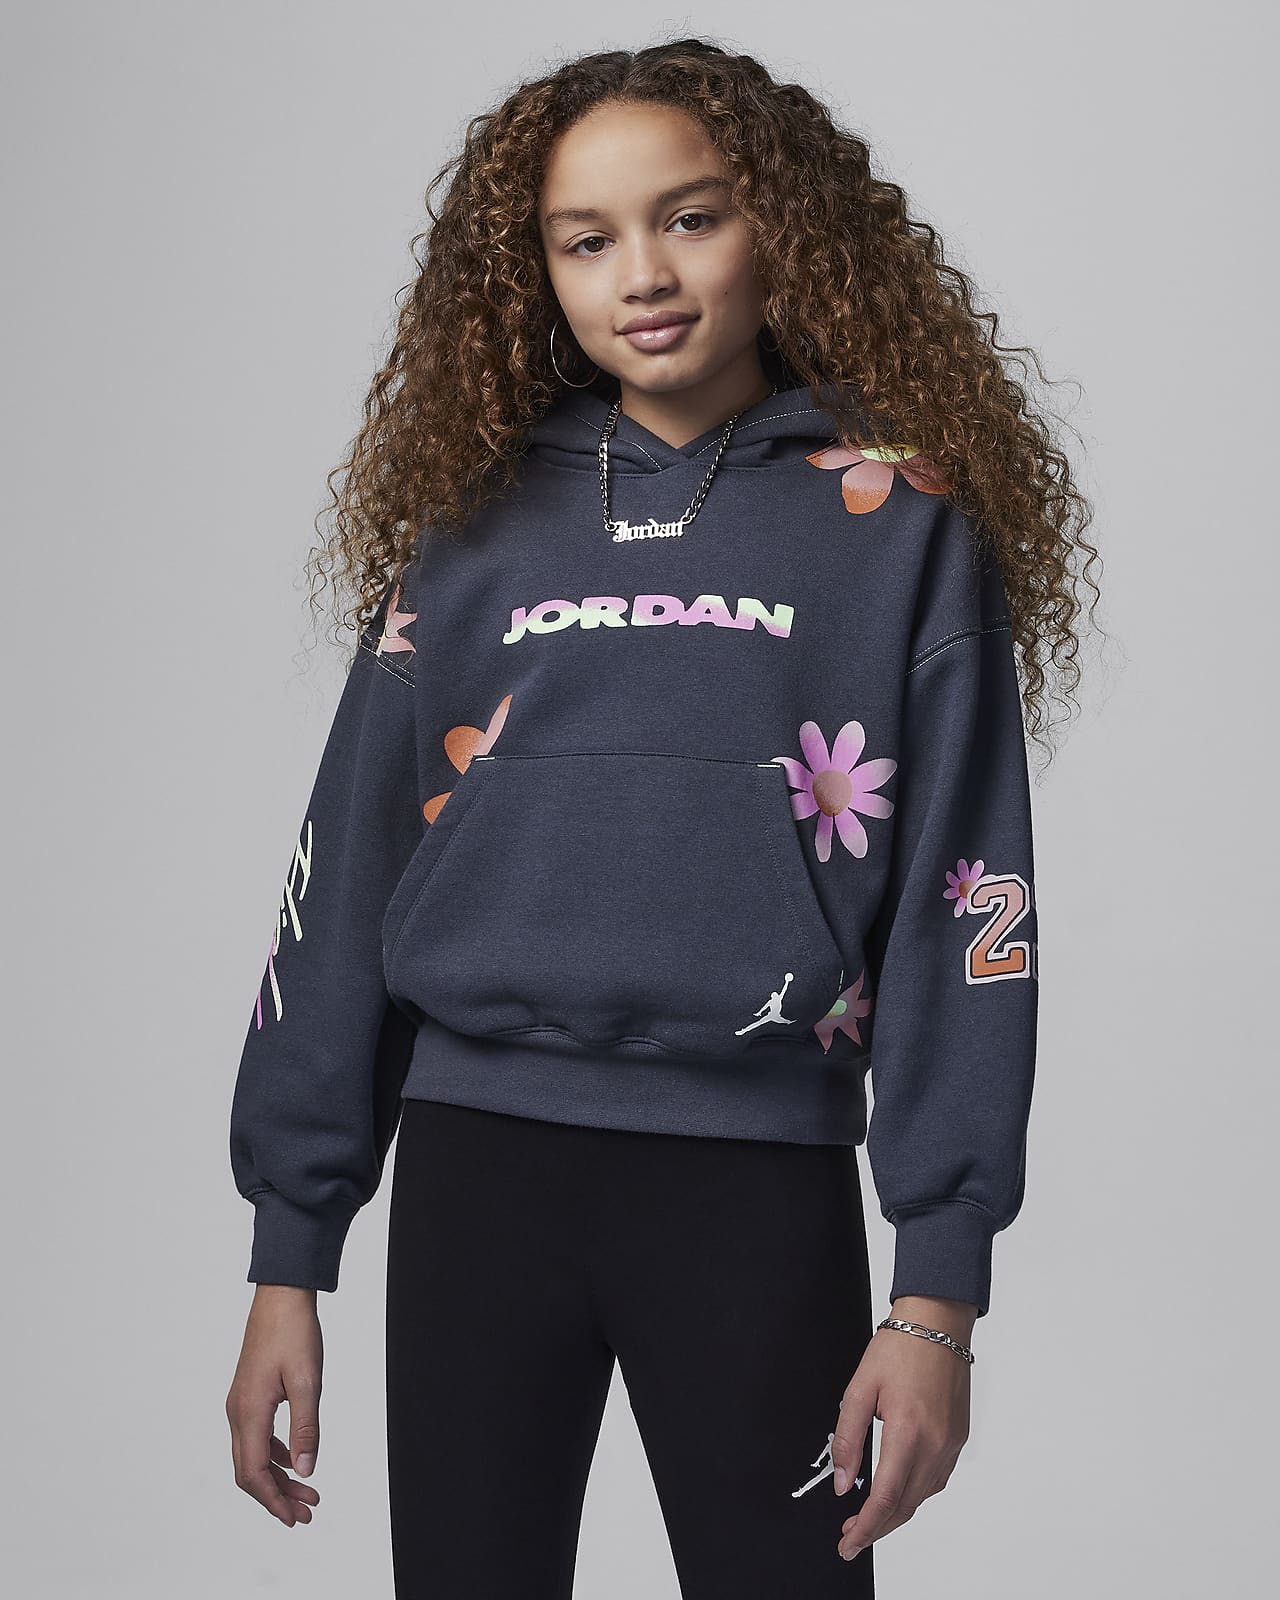 Sudadera con gorro para niños talla grande Jordan Deloris Jordan Flowers